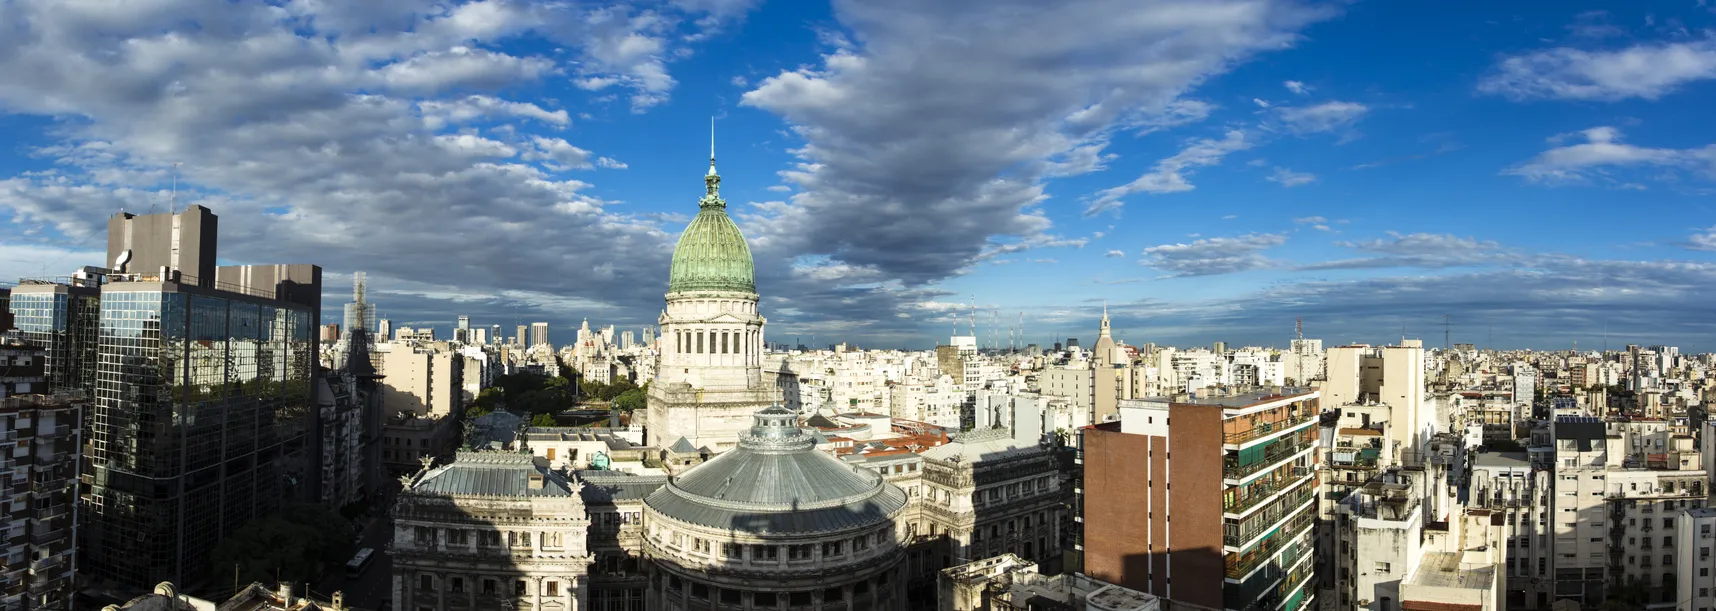 Panorama sur Buenos Aires | © iStockphoto.com / Tenedos 